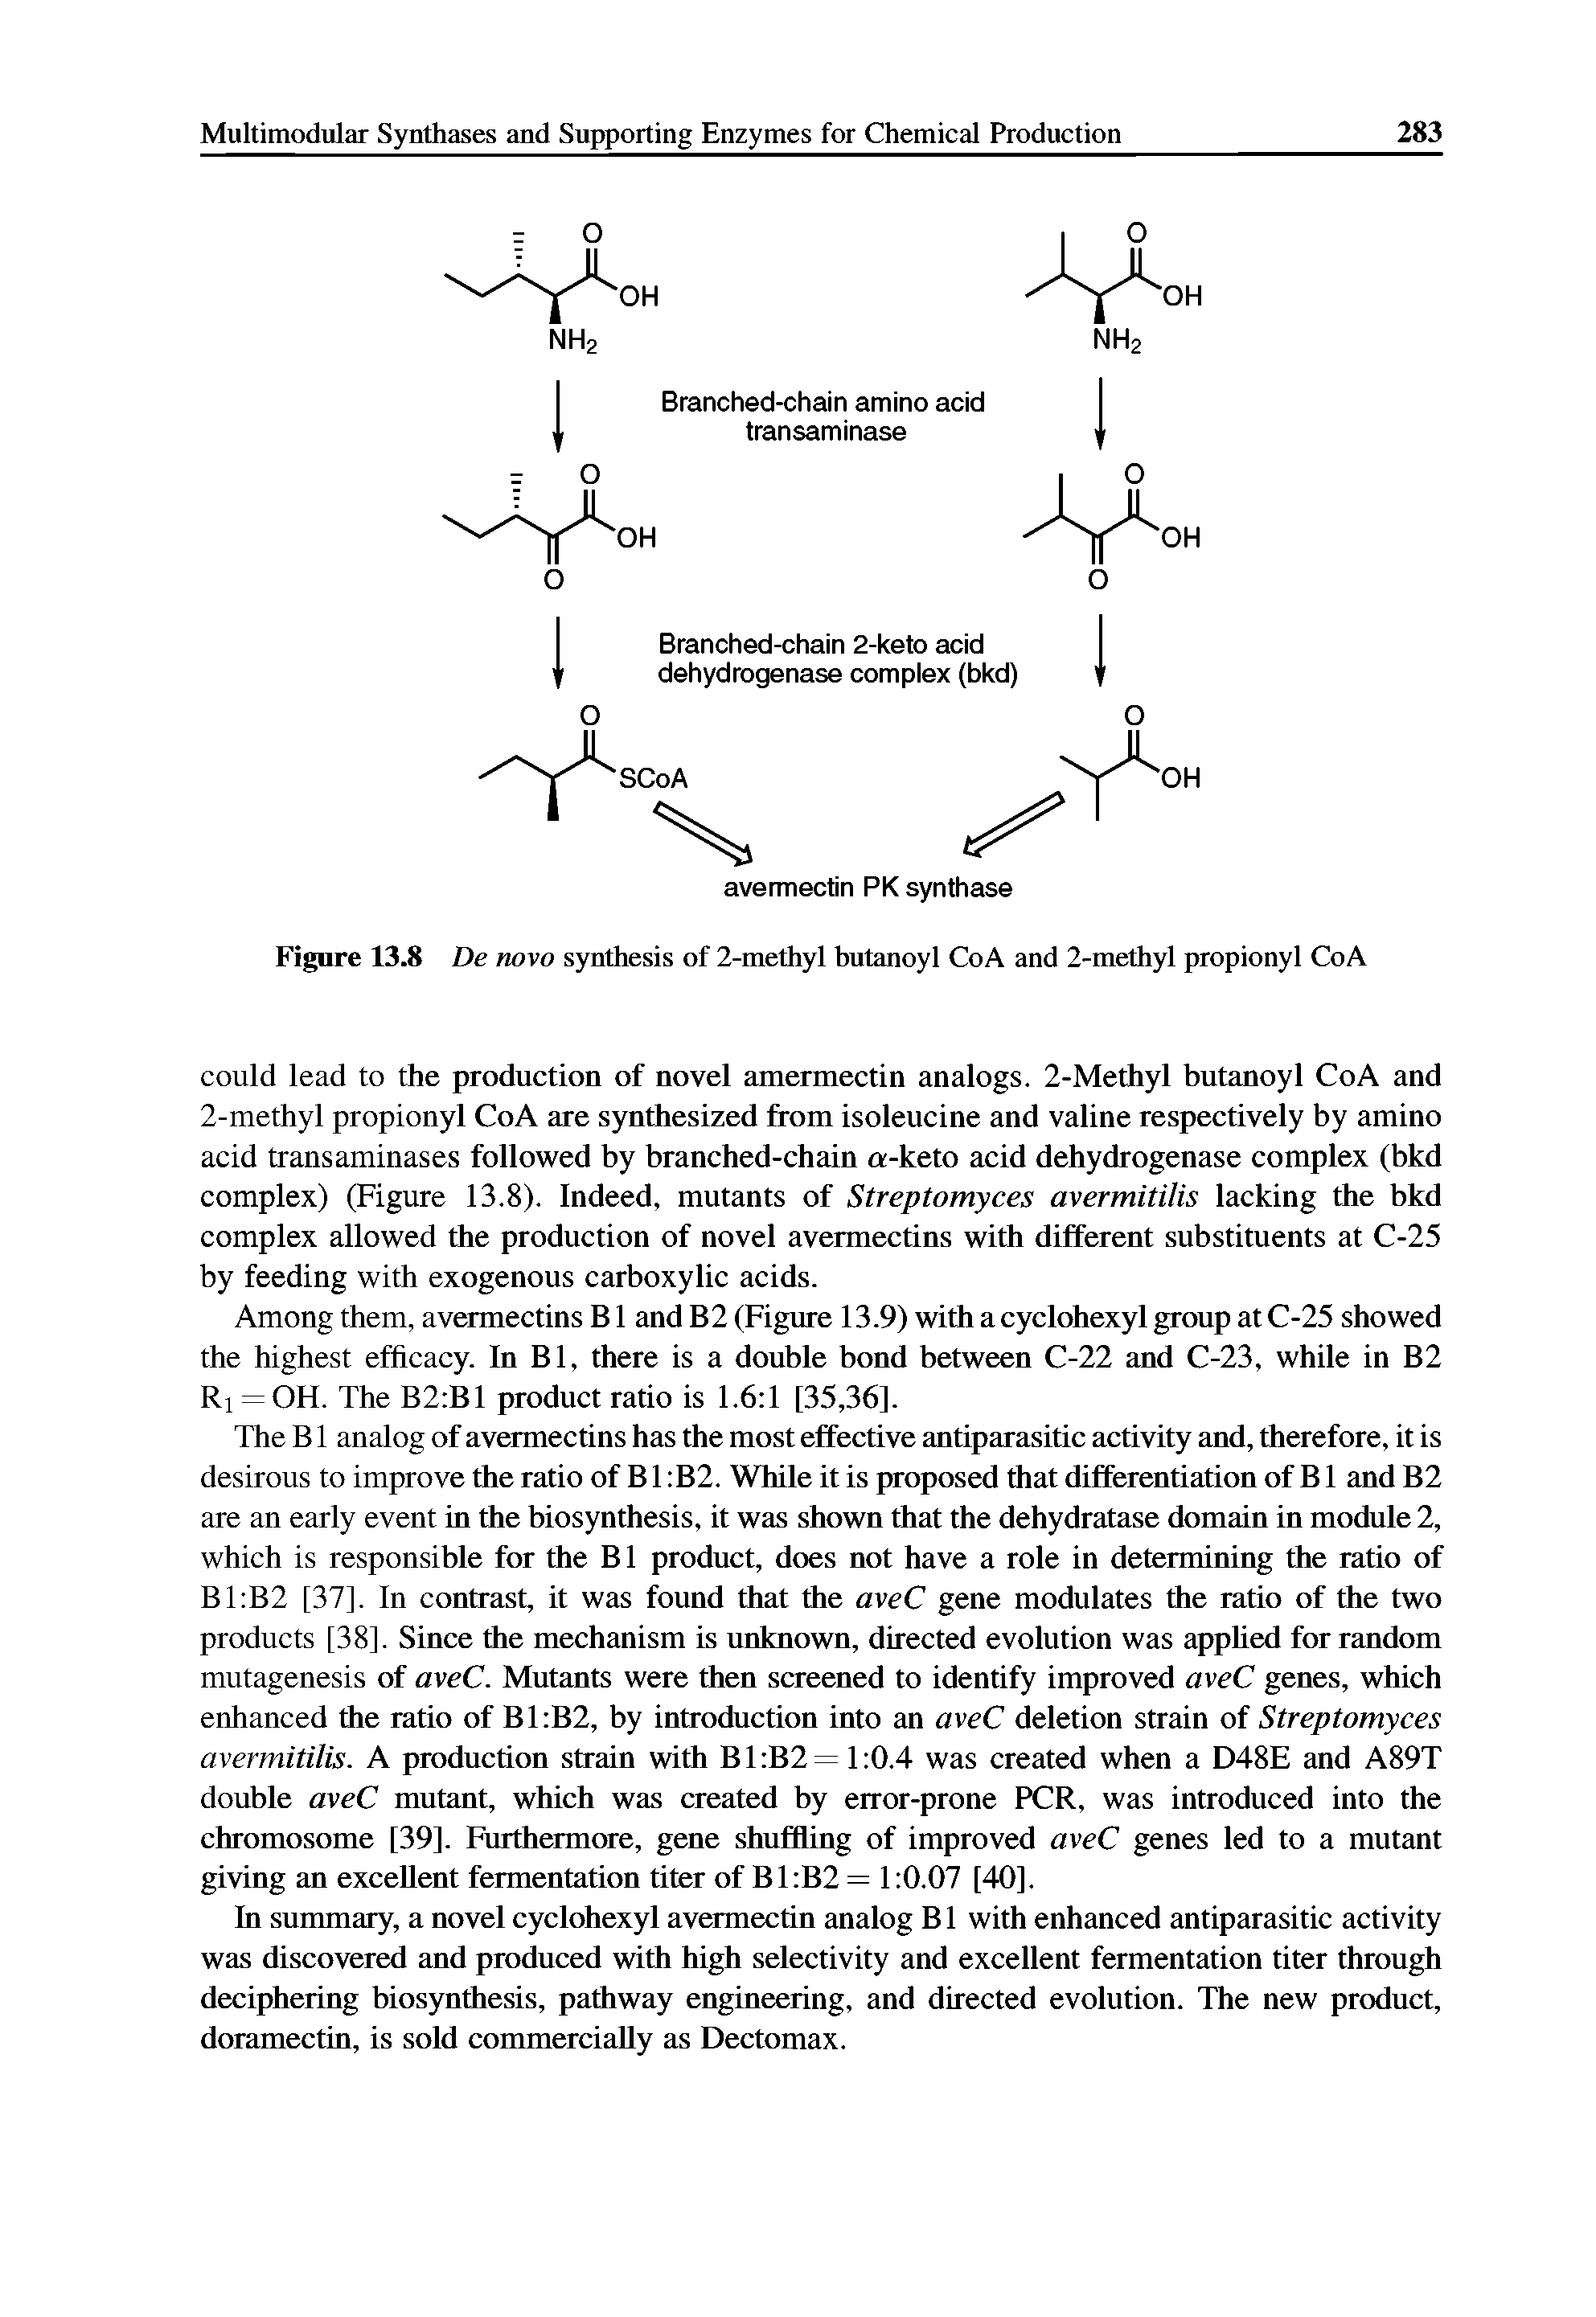 Figure 13.8 De novo synthesis of 2-methyl hutanoyl CoA and 2-methyl propionyl CoA...